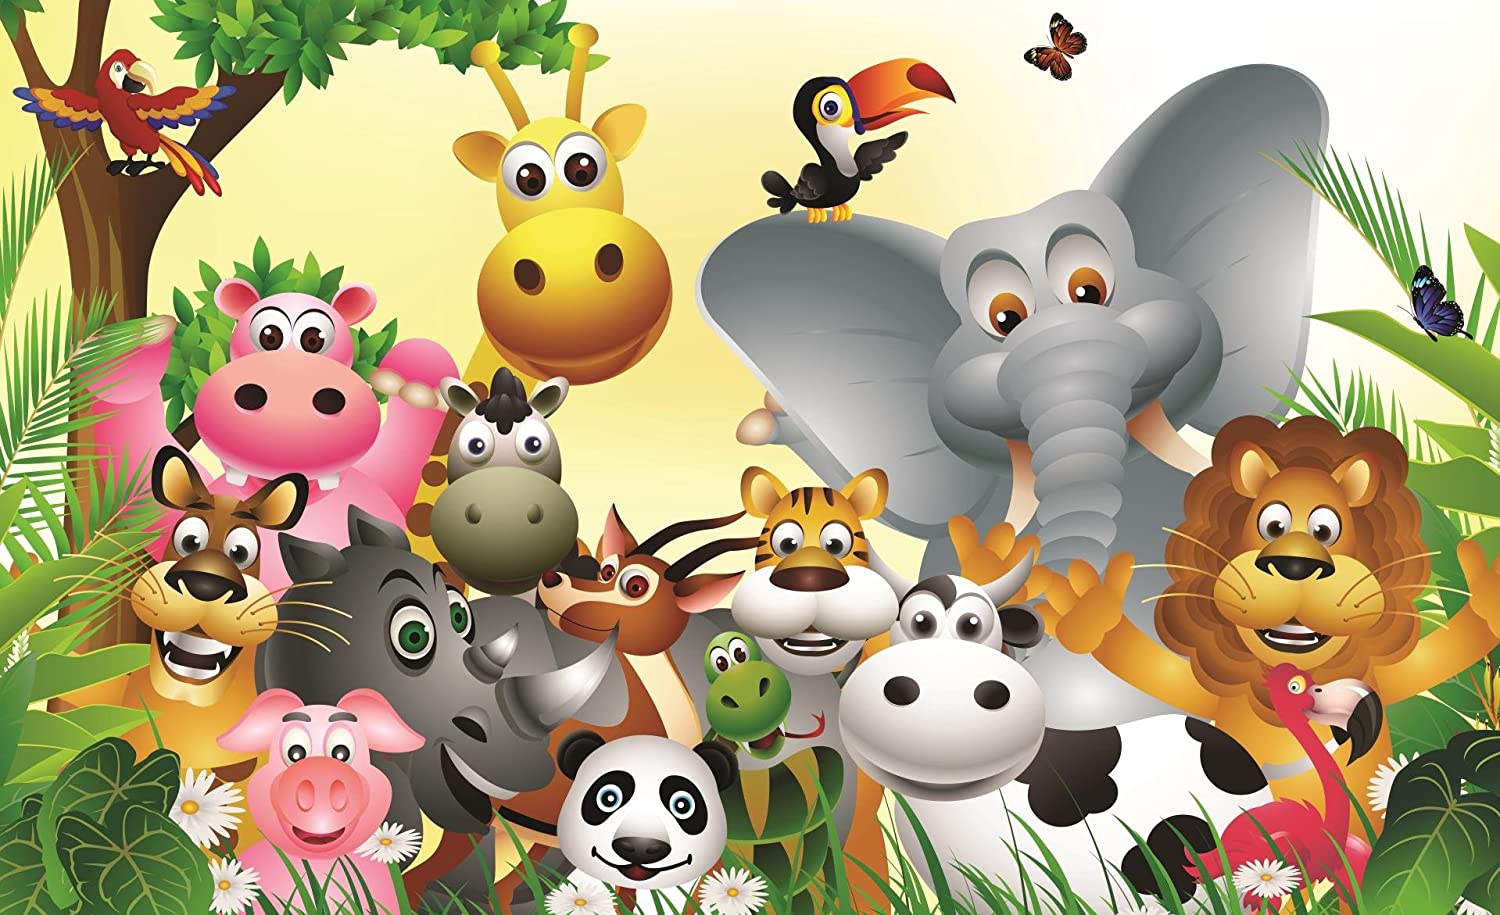 Cartoon Jungle Animals Background